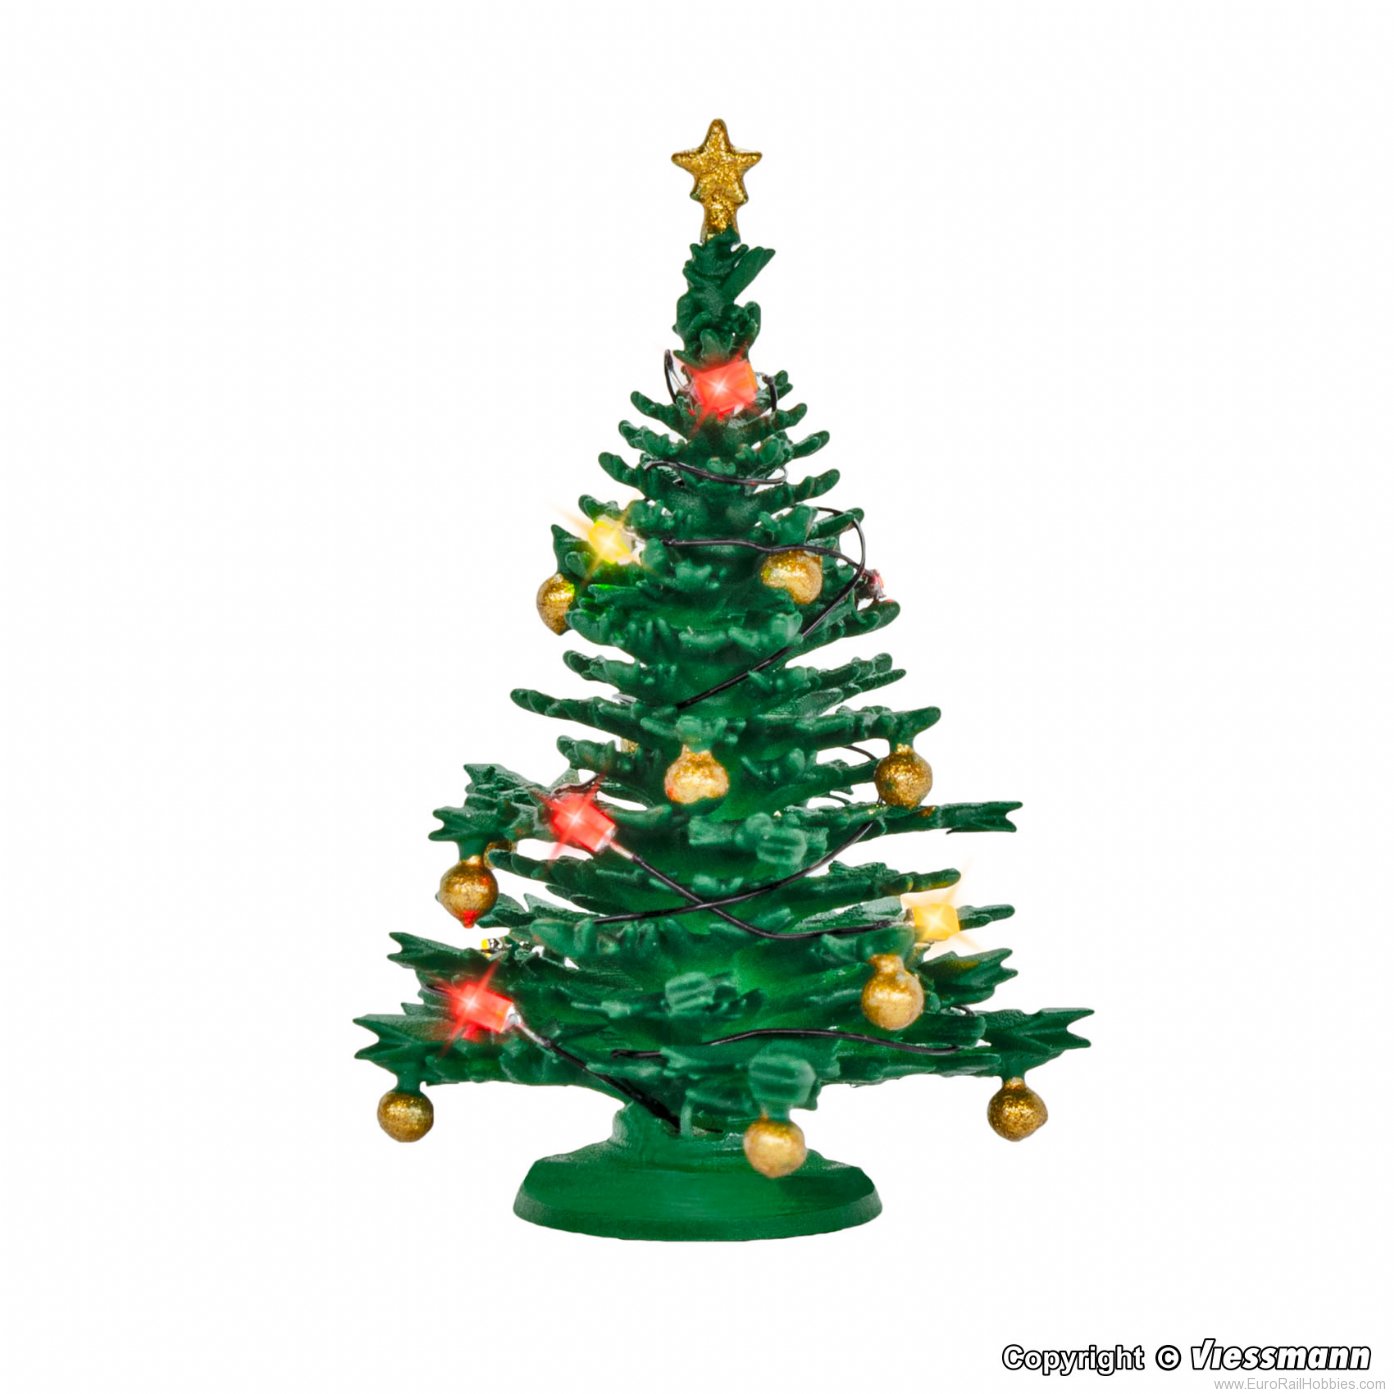 Viessmann 5831 Christmas tree, track size-independent